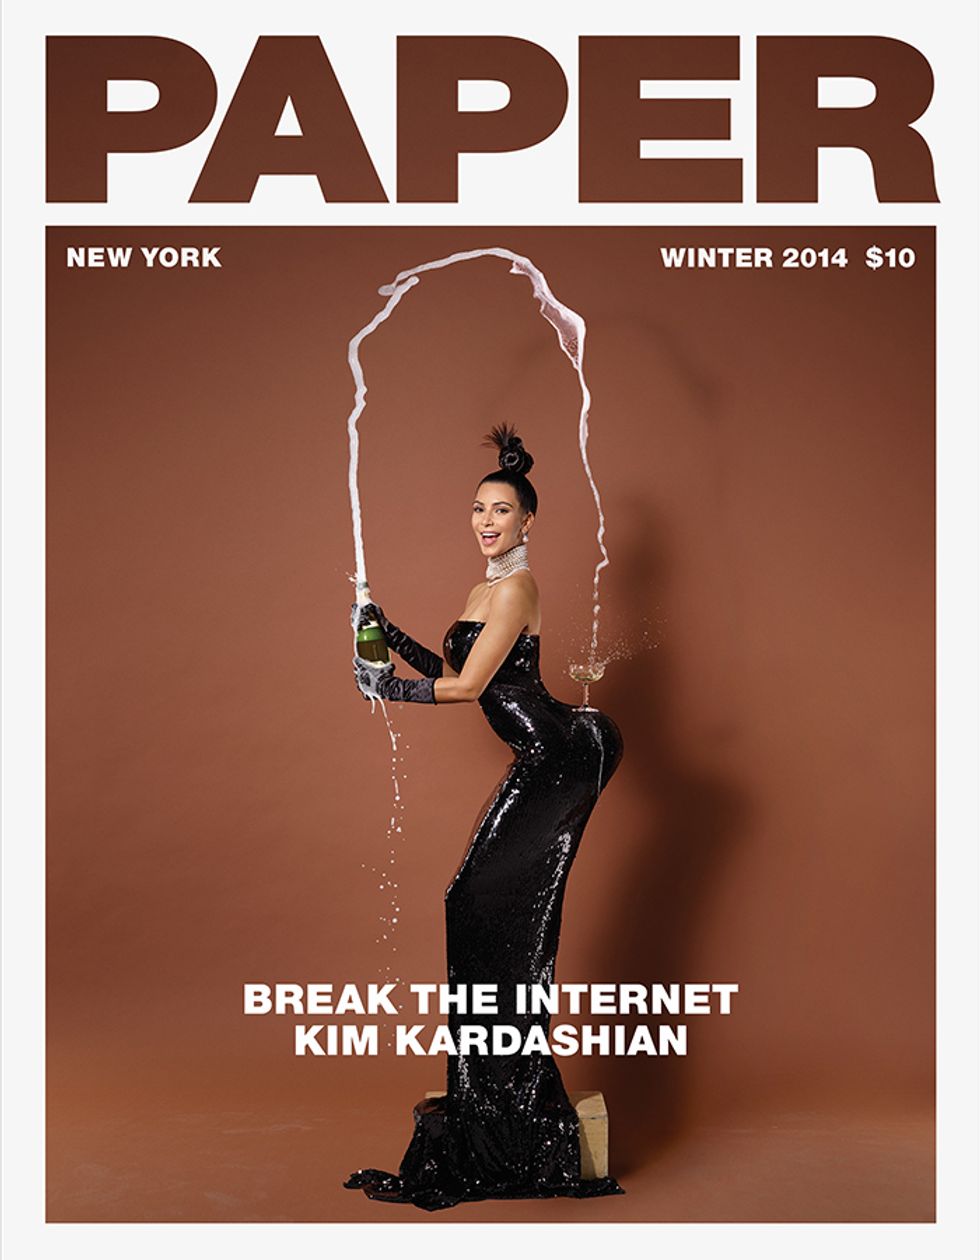 Introducing Our Winter Cover Star: Kim Kardashian